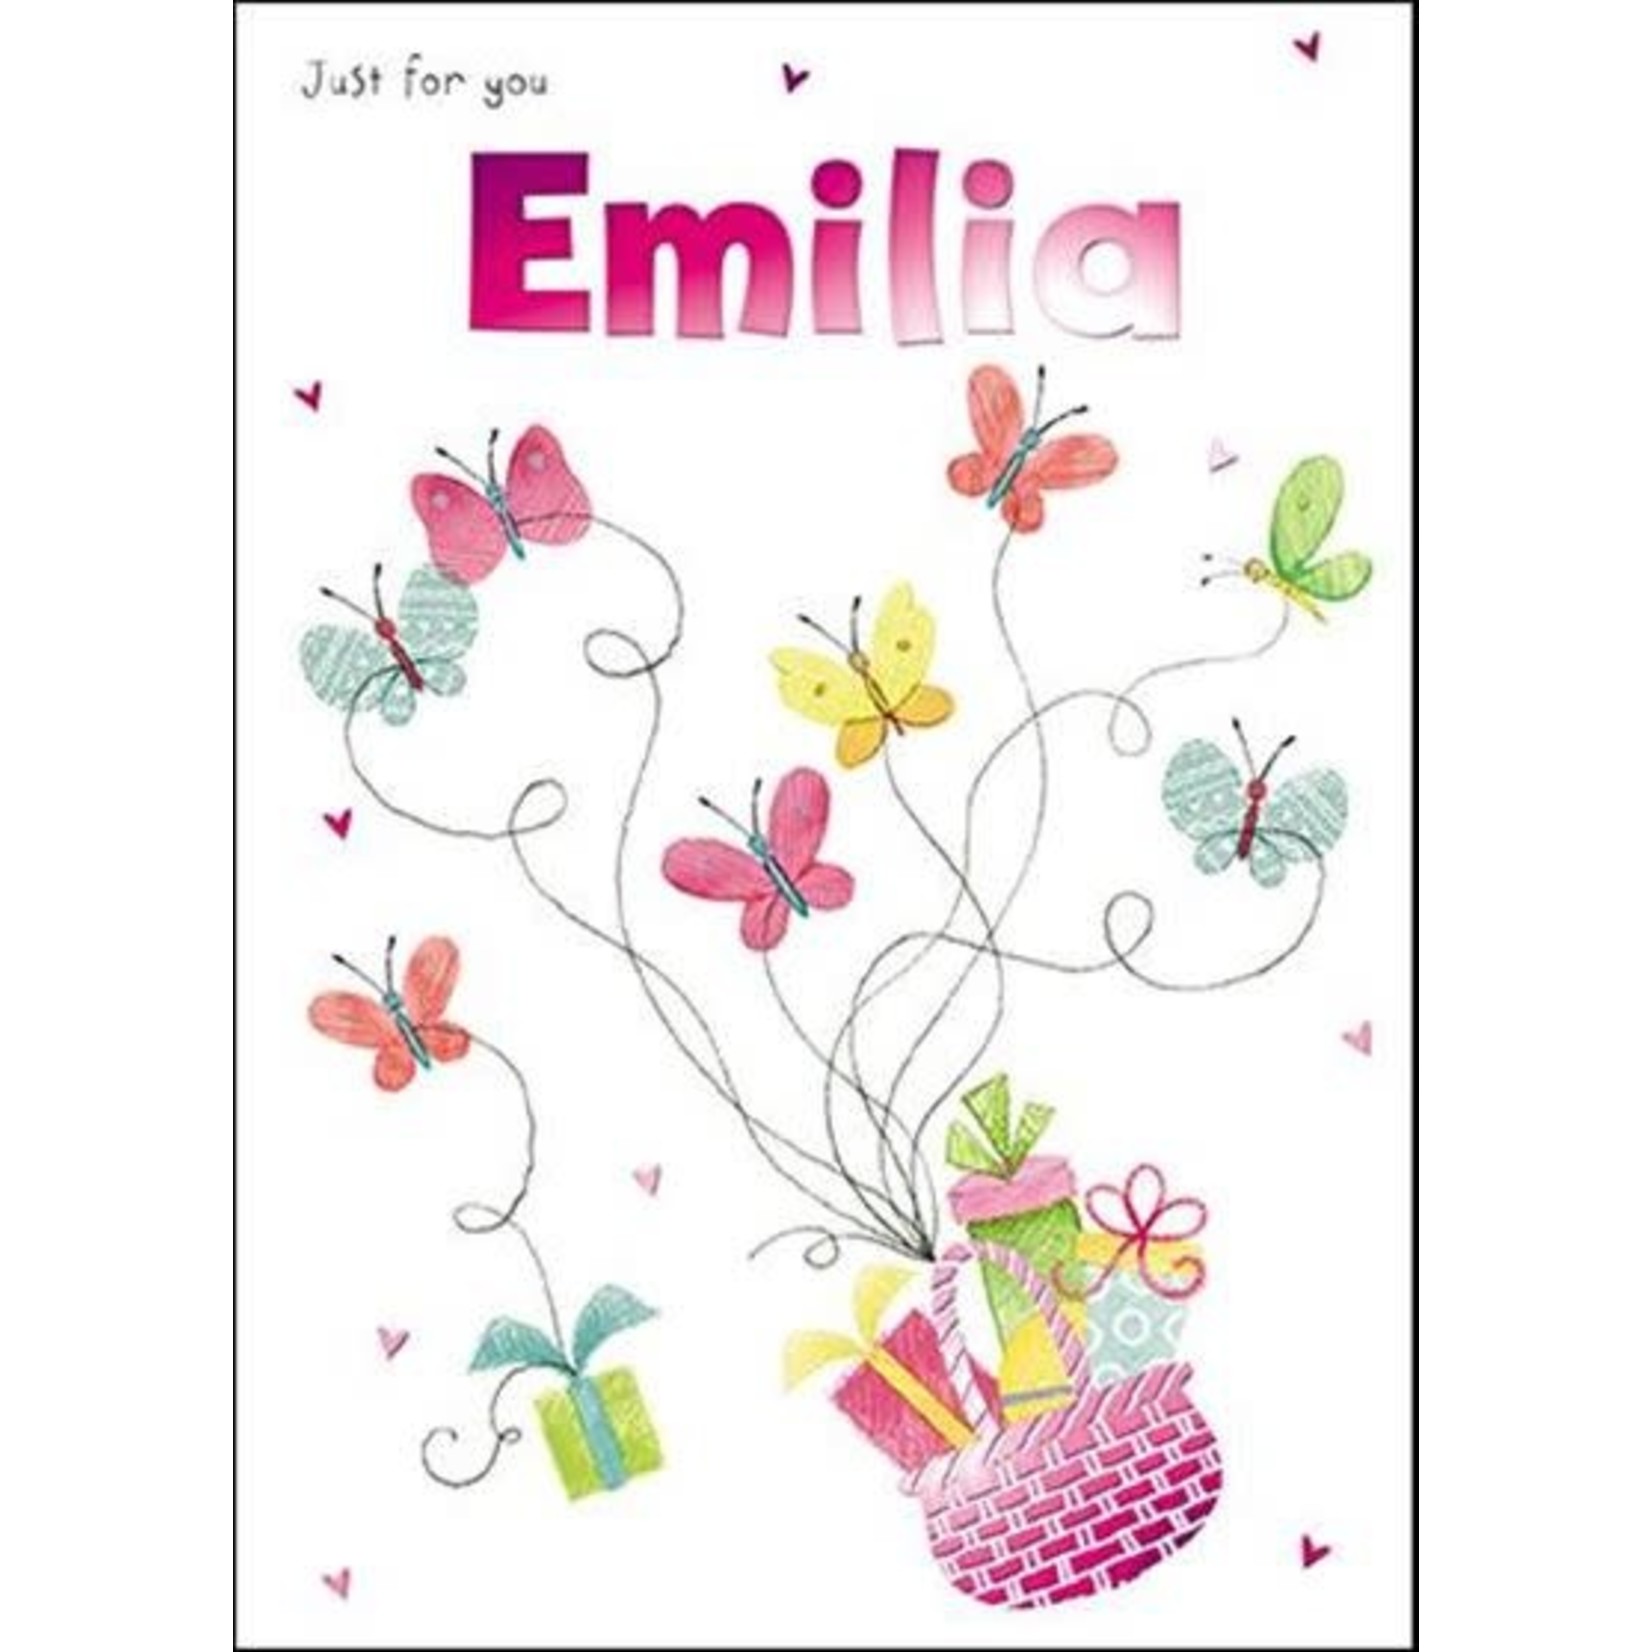 Treats & Smiles Personalised Birthday Card - Emilia